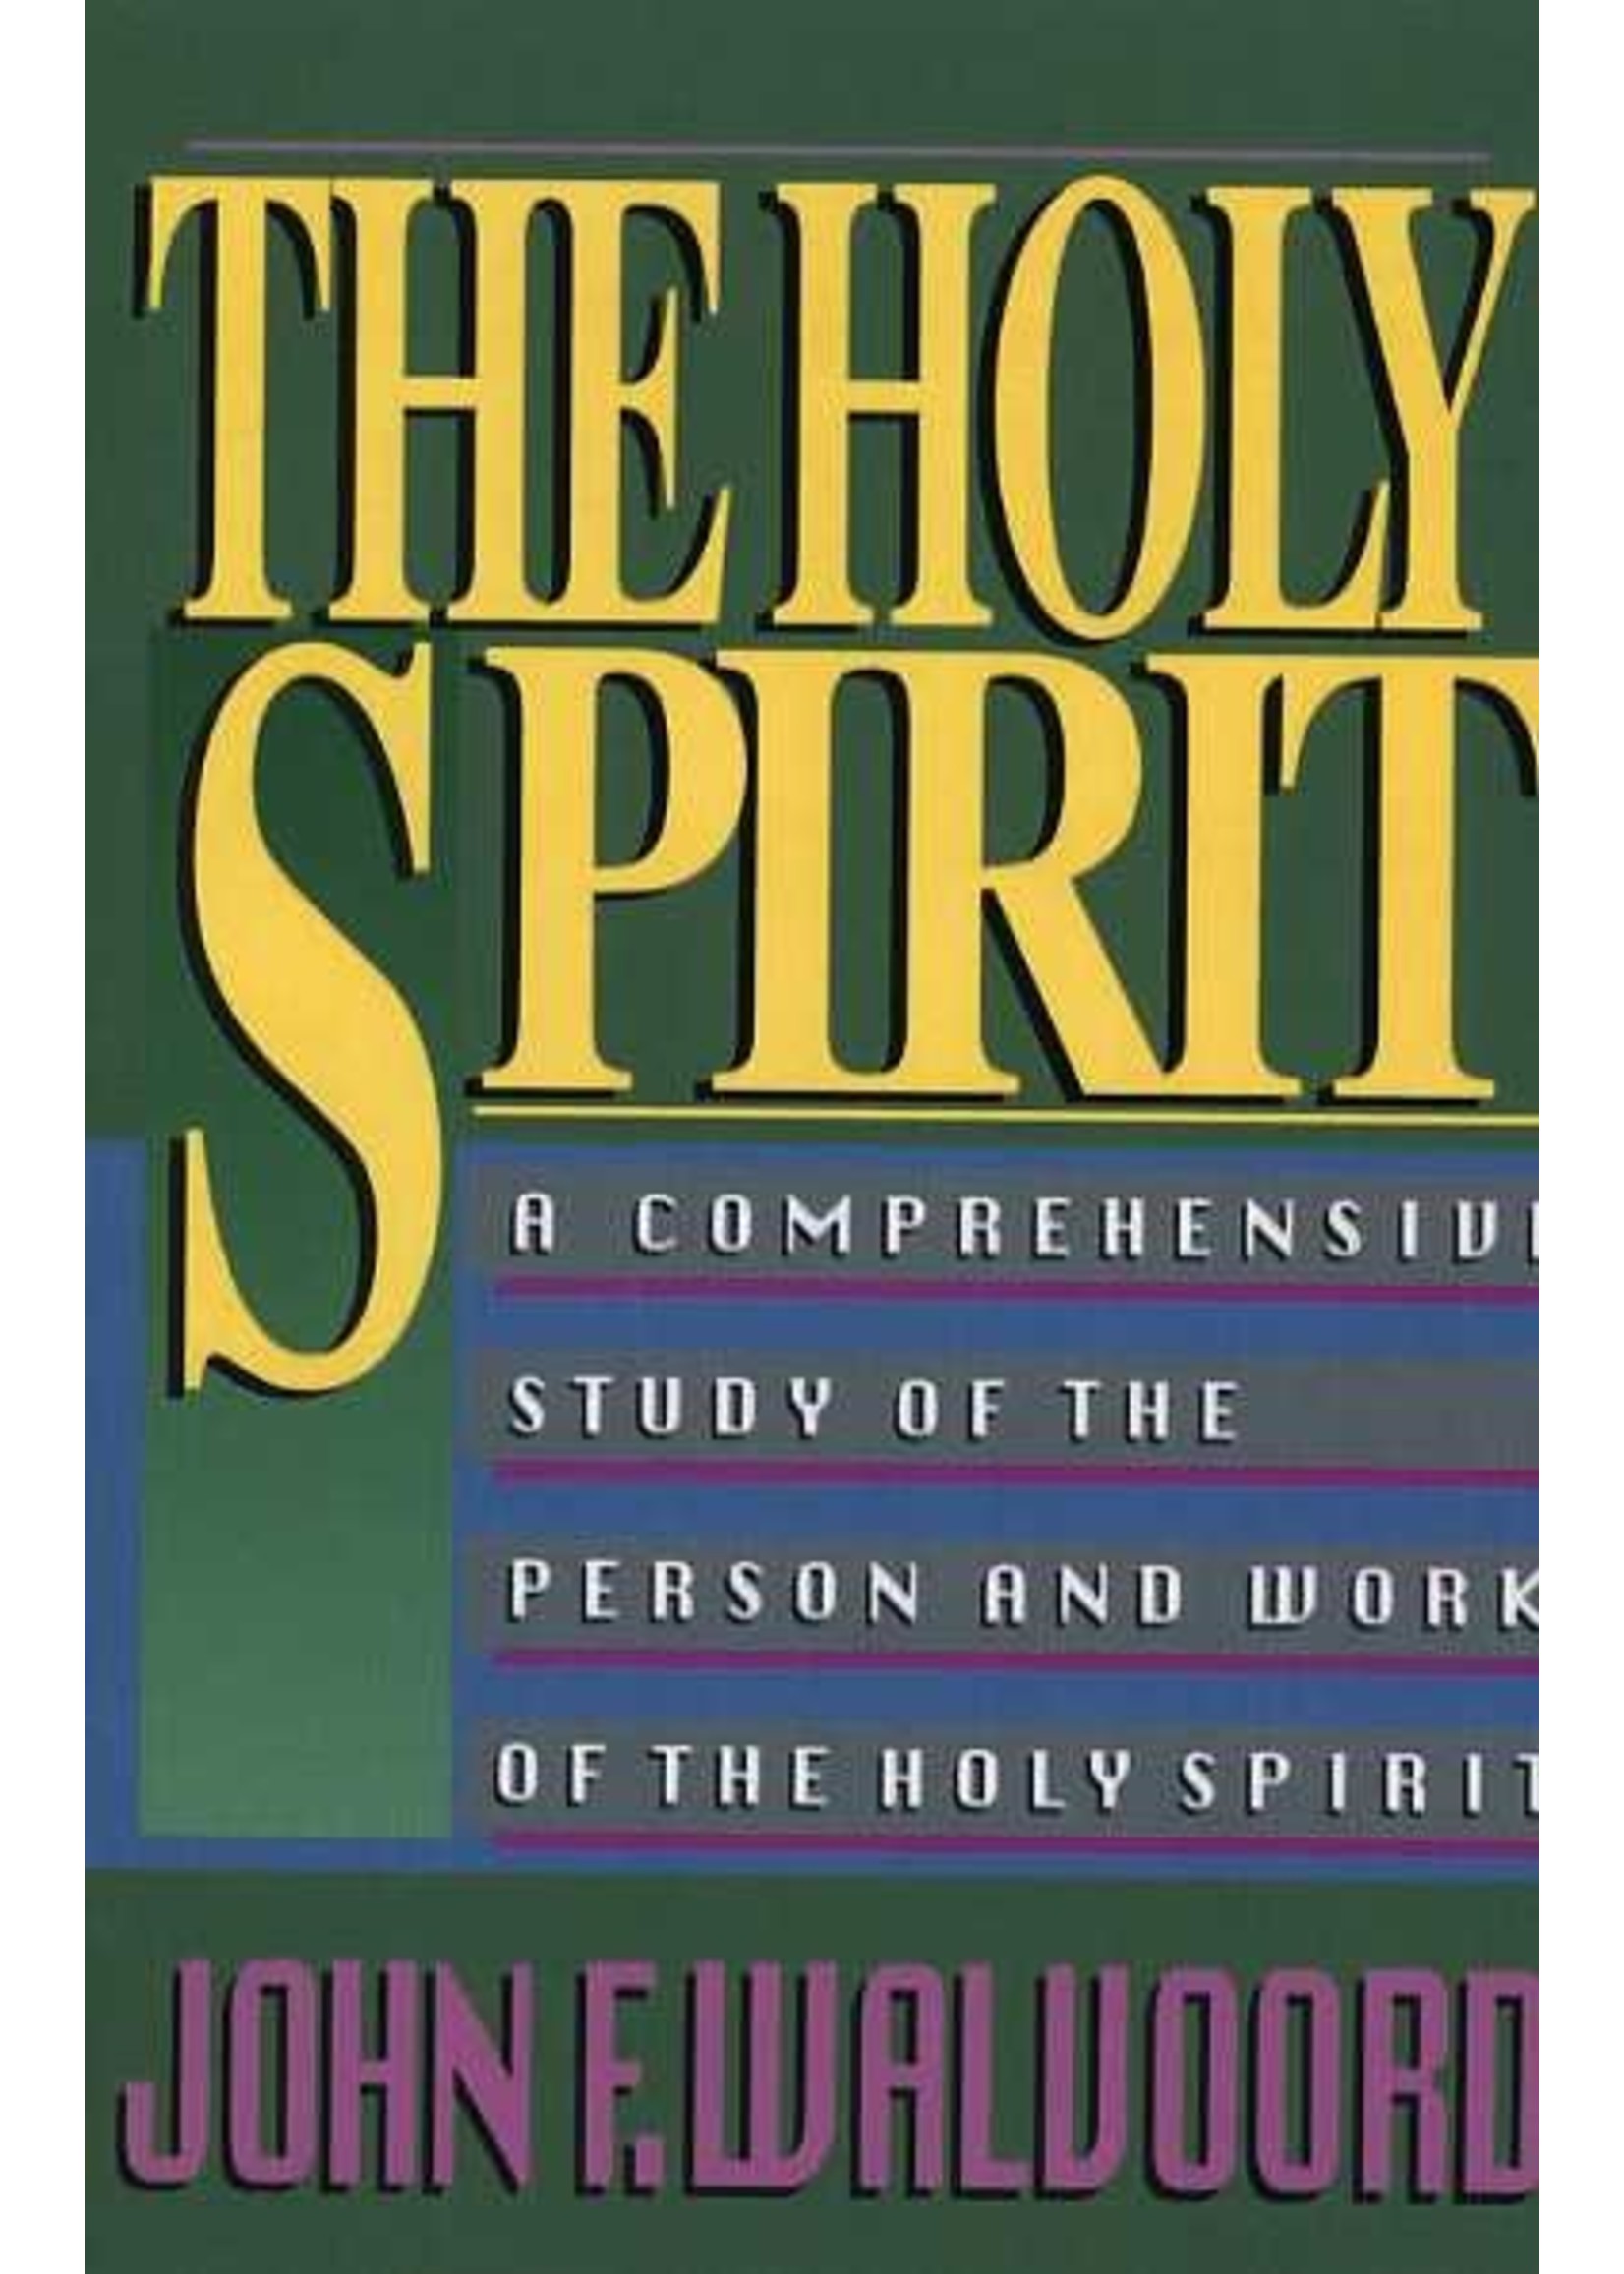 Zondervan Holy Spirit - John Walvoord